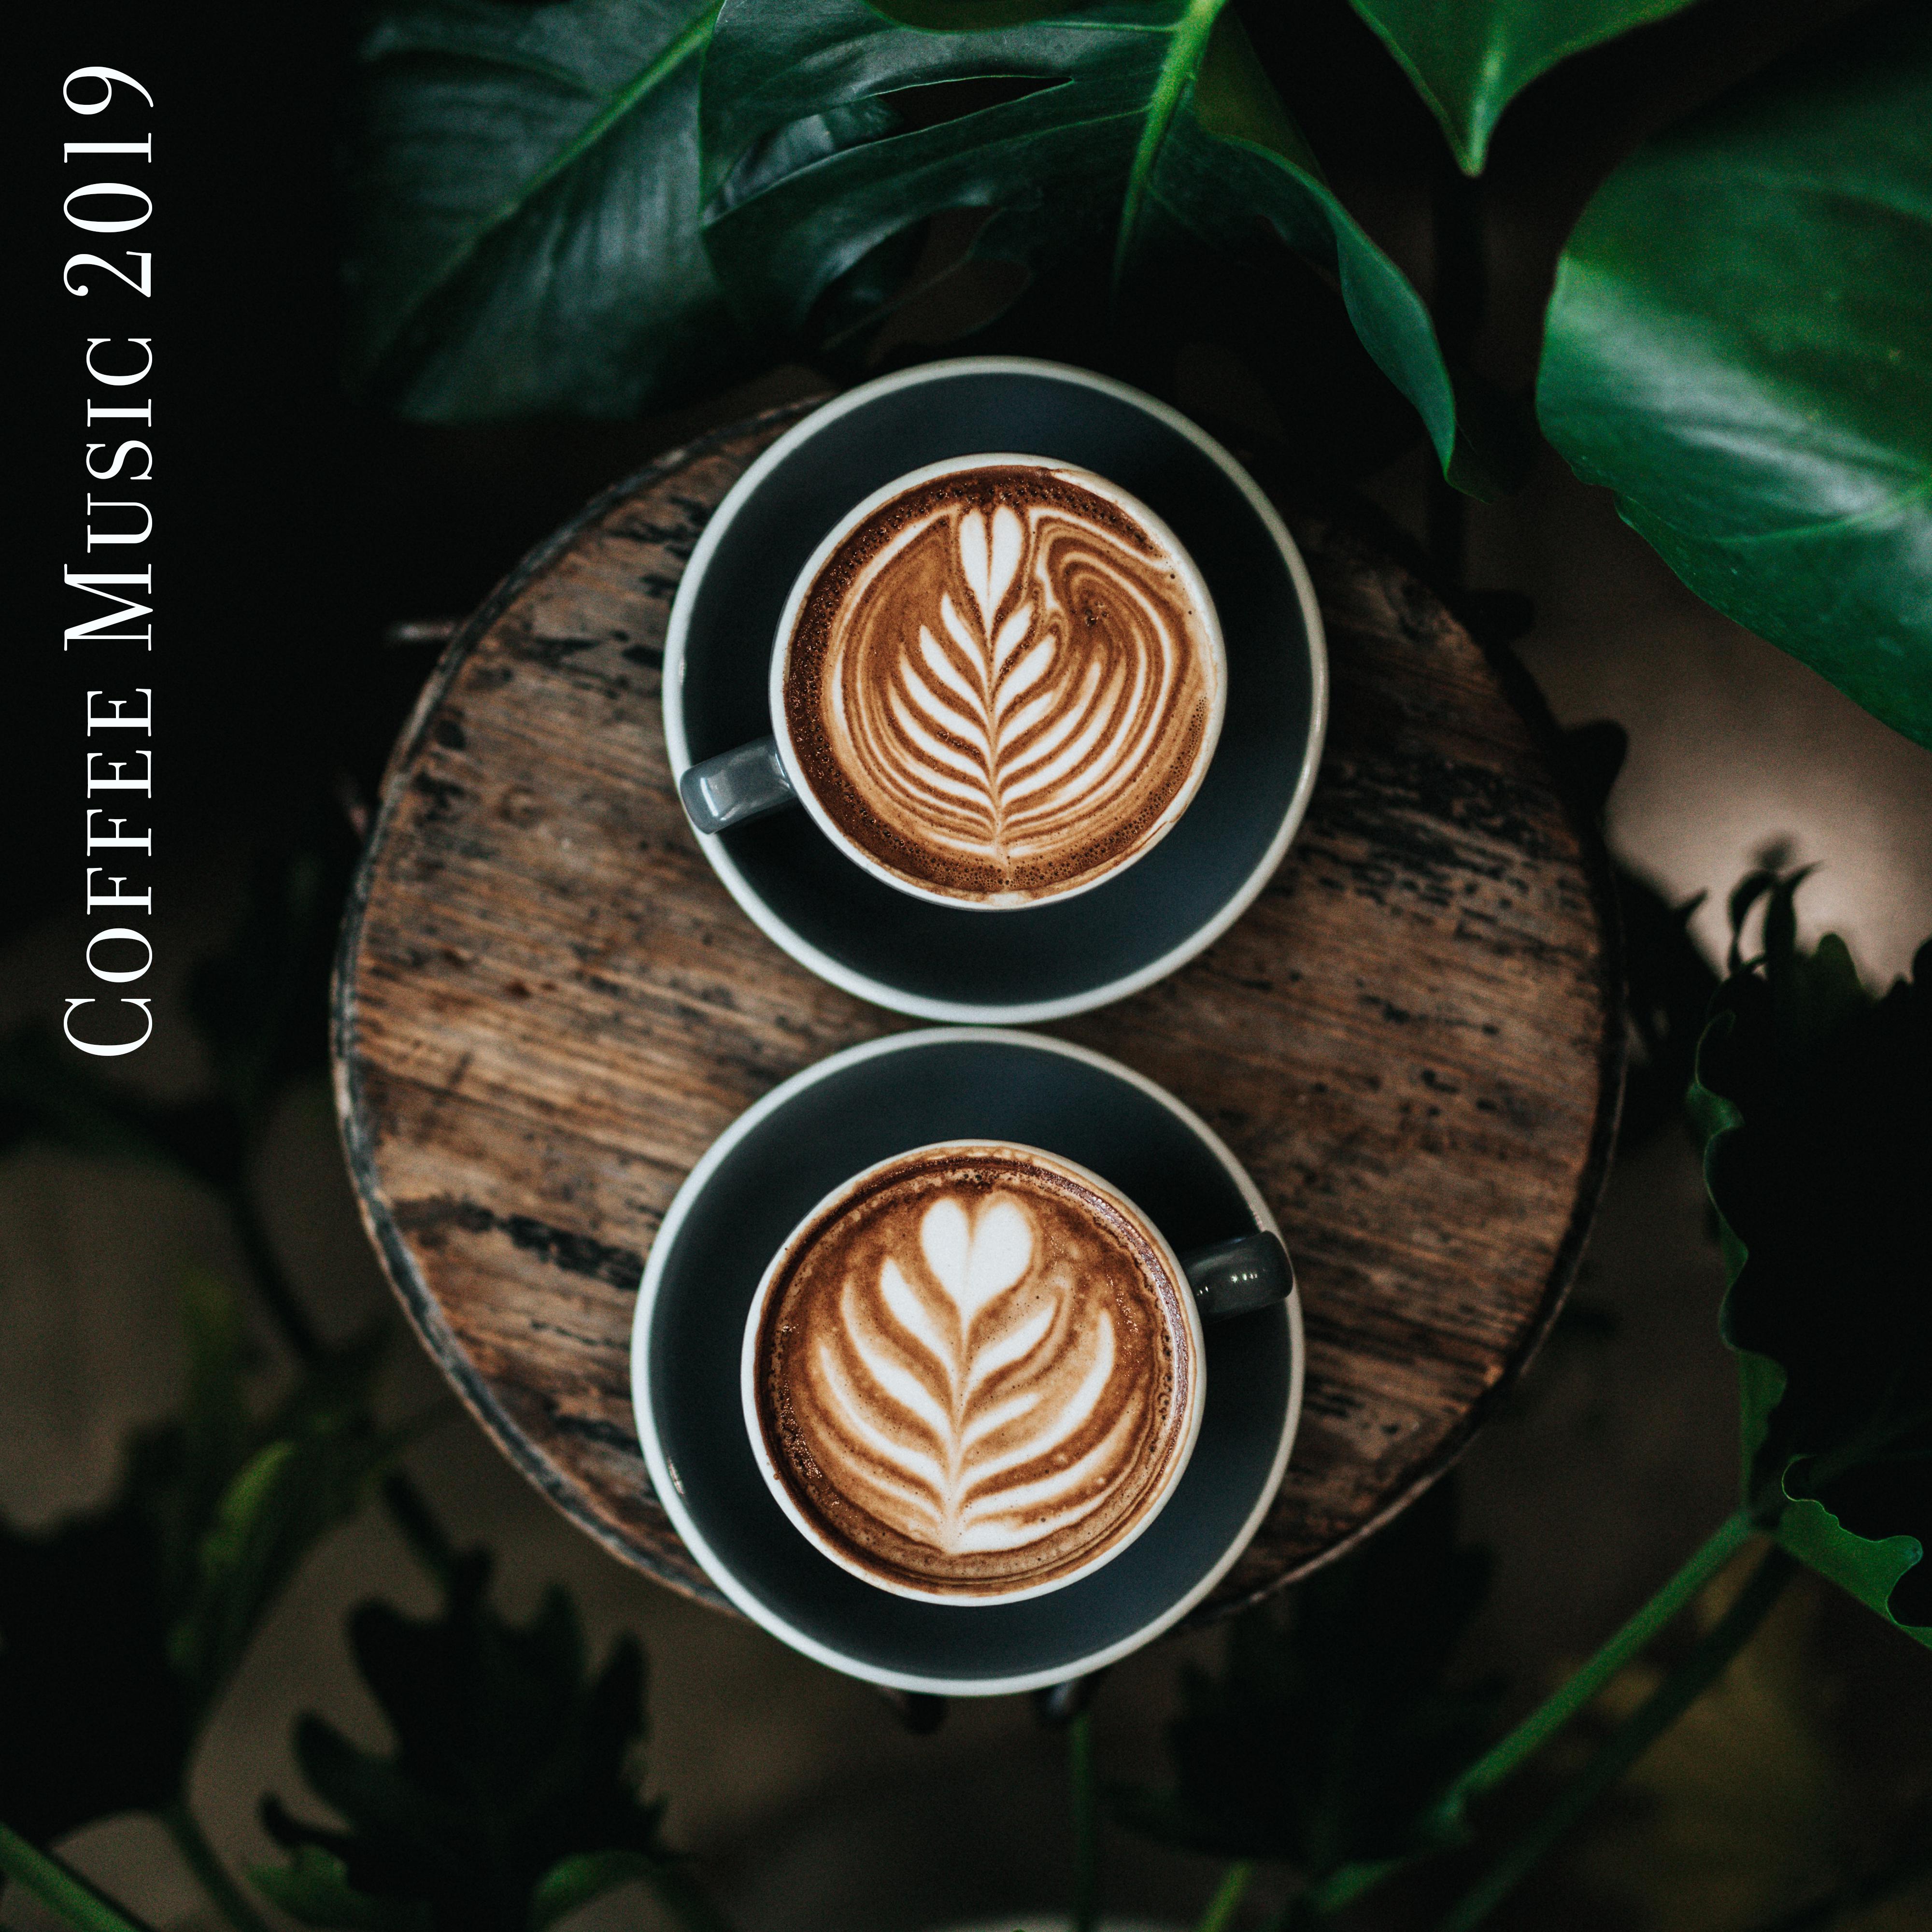 Coffee Music 2019 – Jazz Relaxation, Instrumental Jazz Music Ambient, Restaurant Music, Calm Down